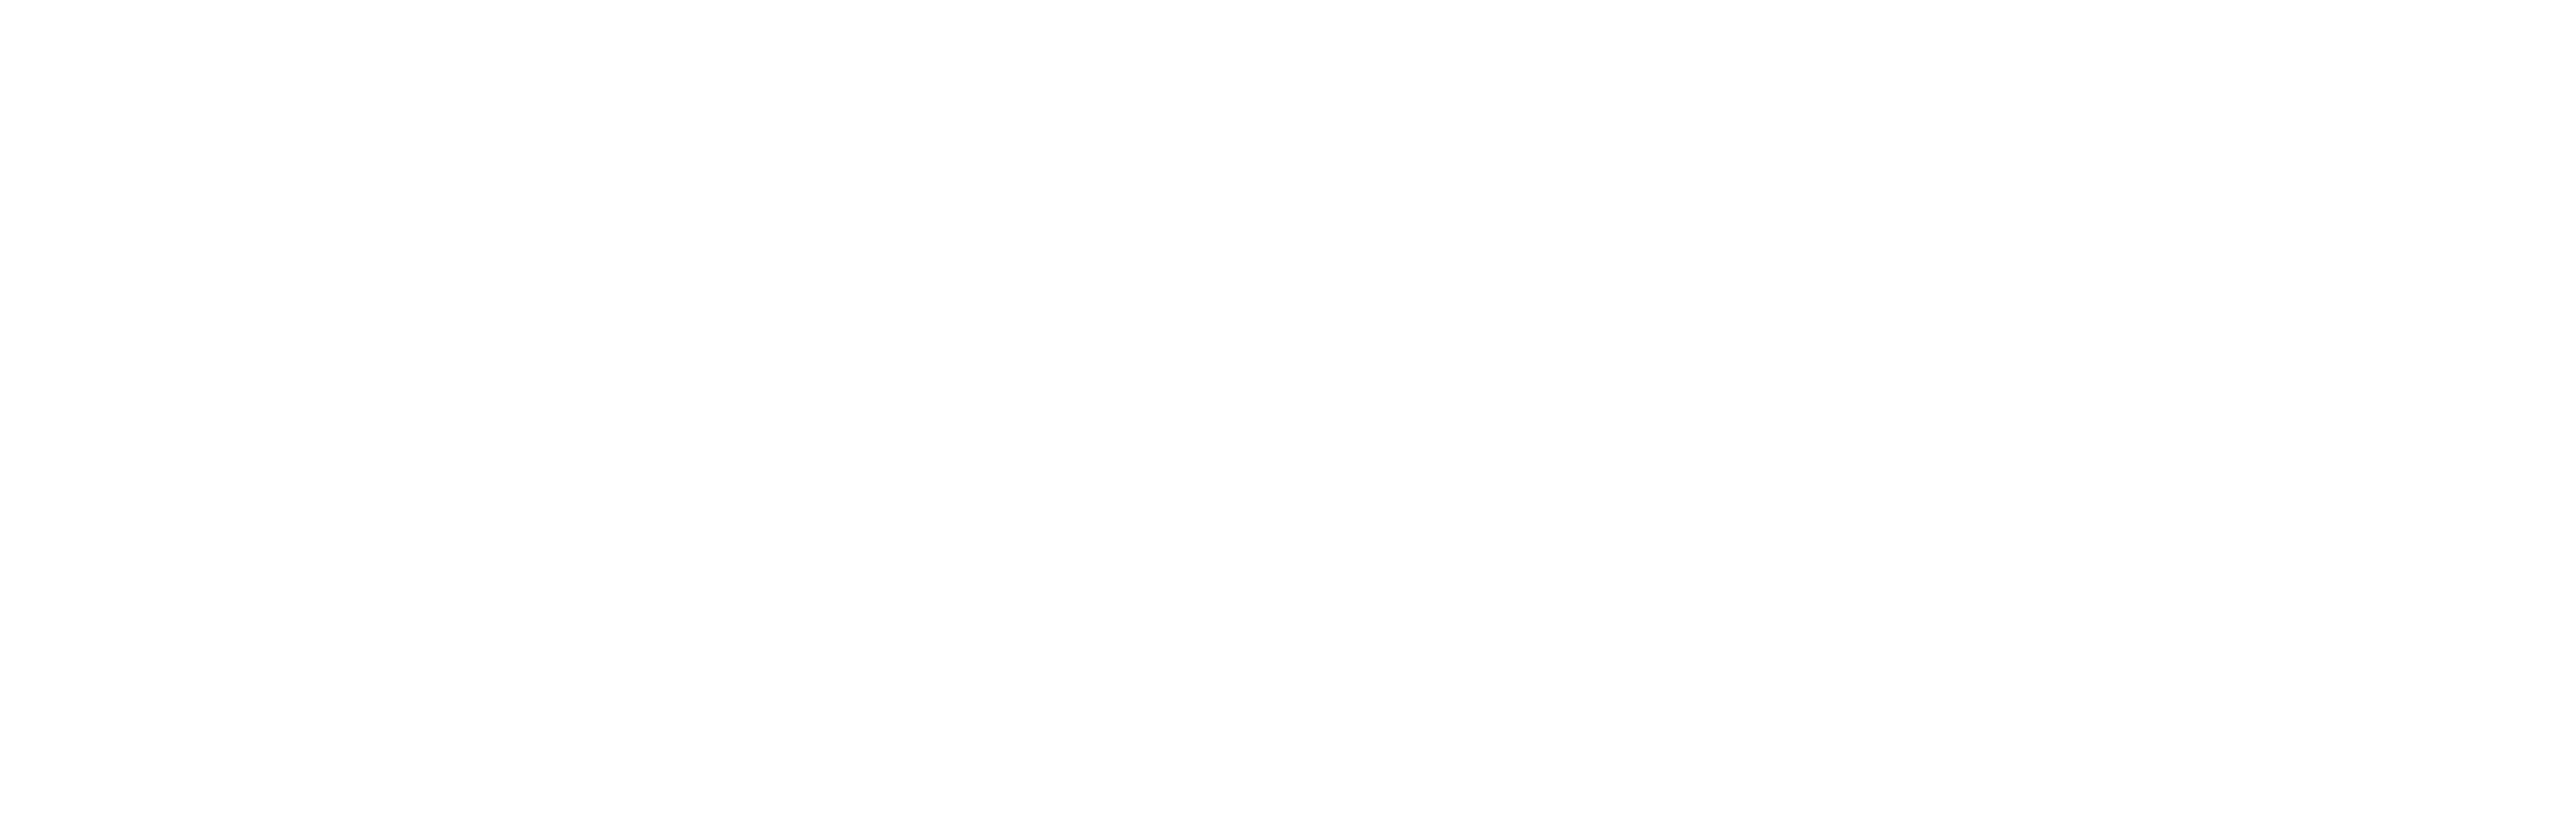 Good Shepherd Hospice